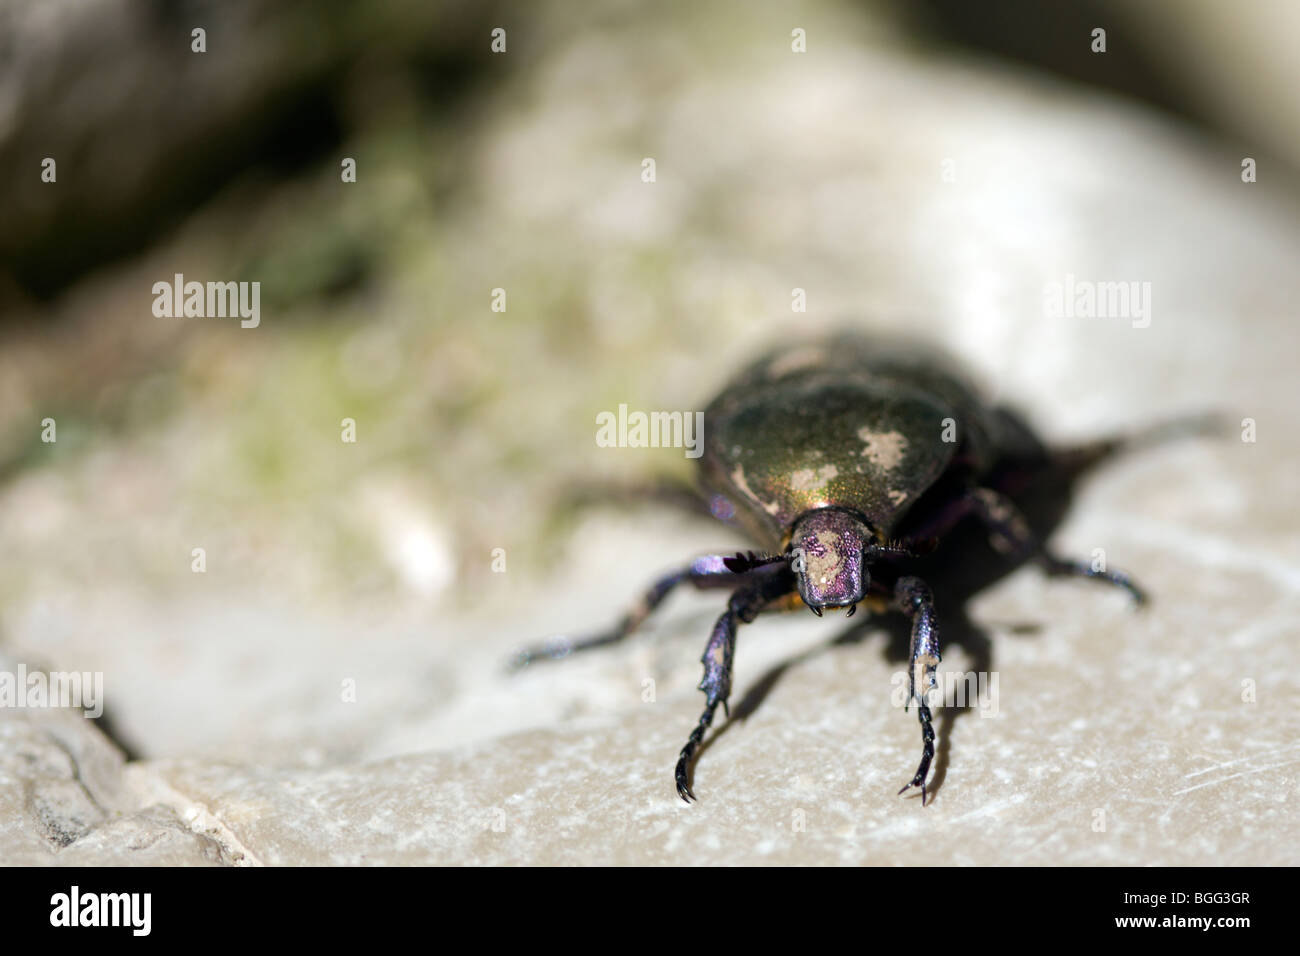 A closeup of a beetle Stock Photo